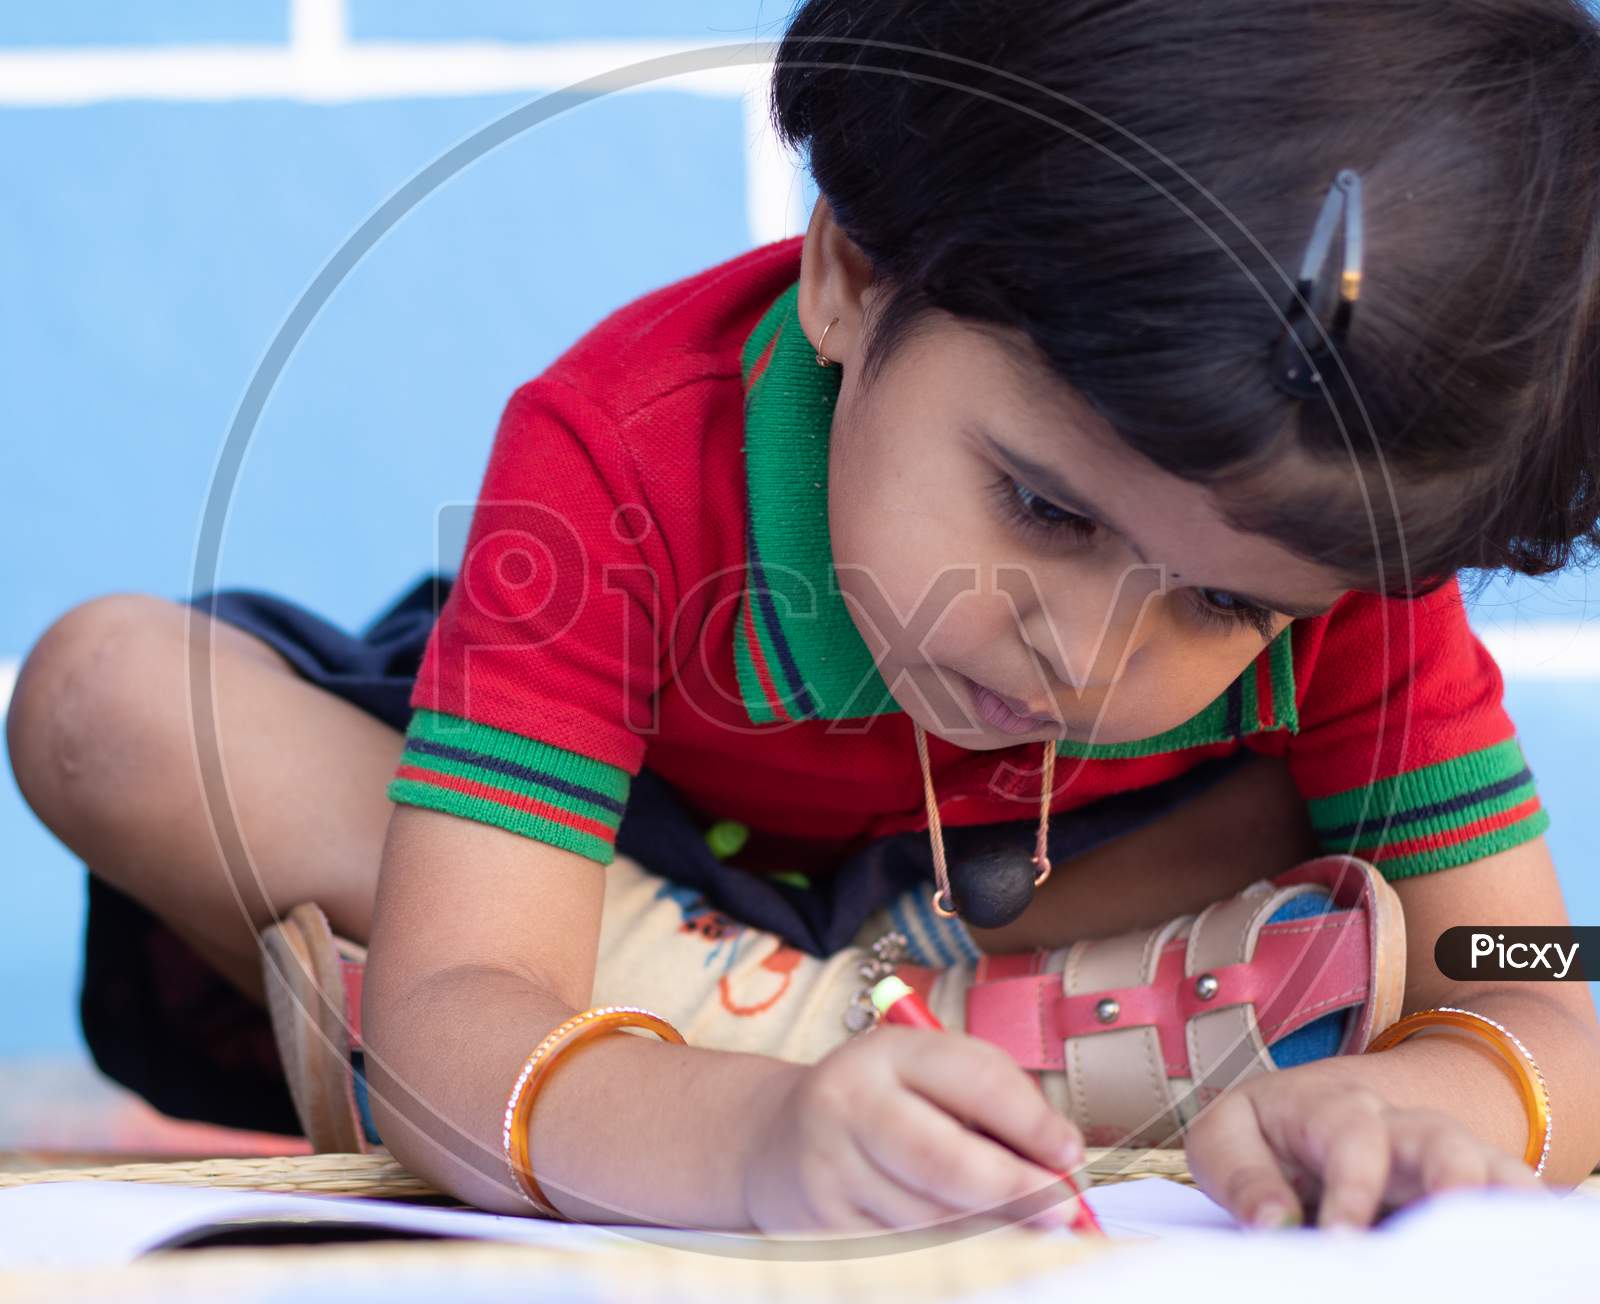 A Kid in School dress is Busy In Writing At School